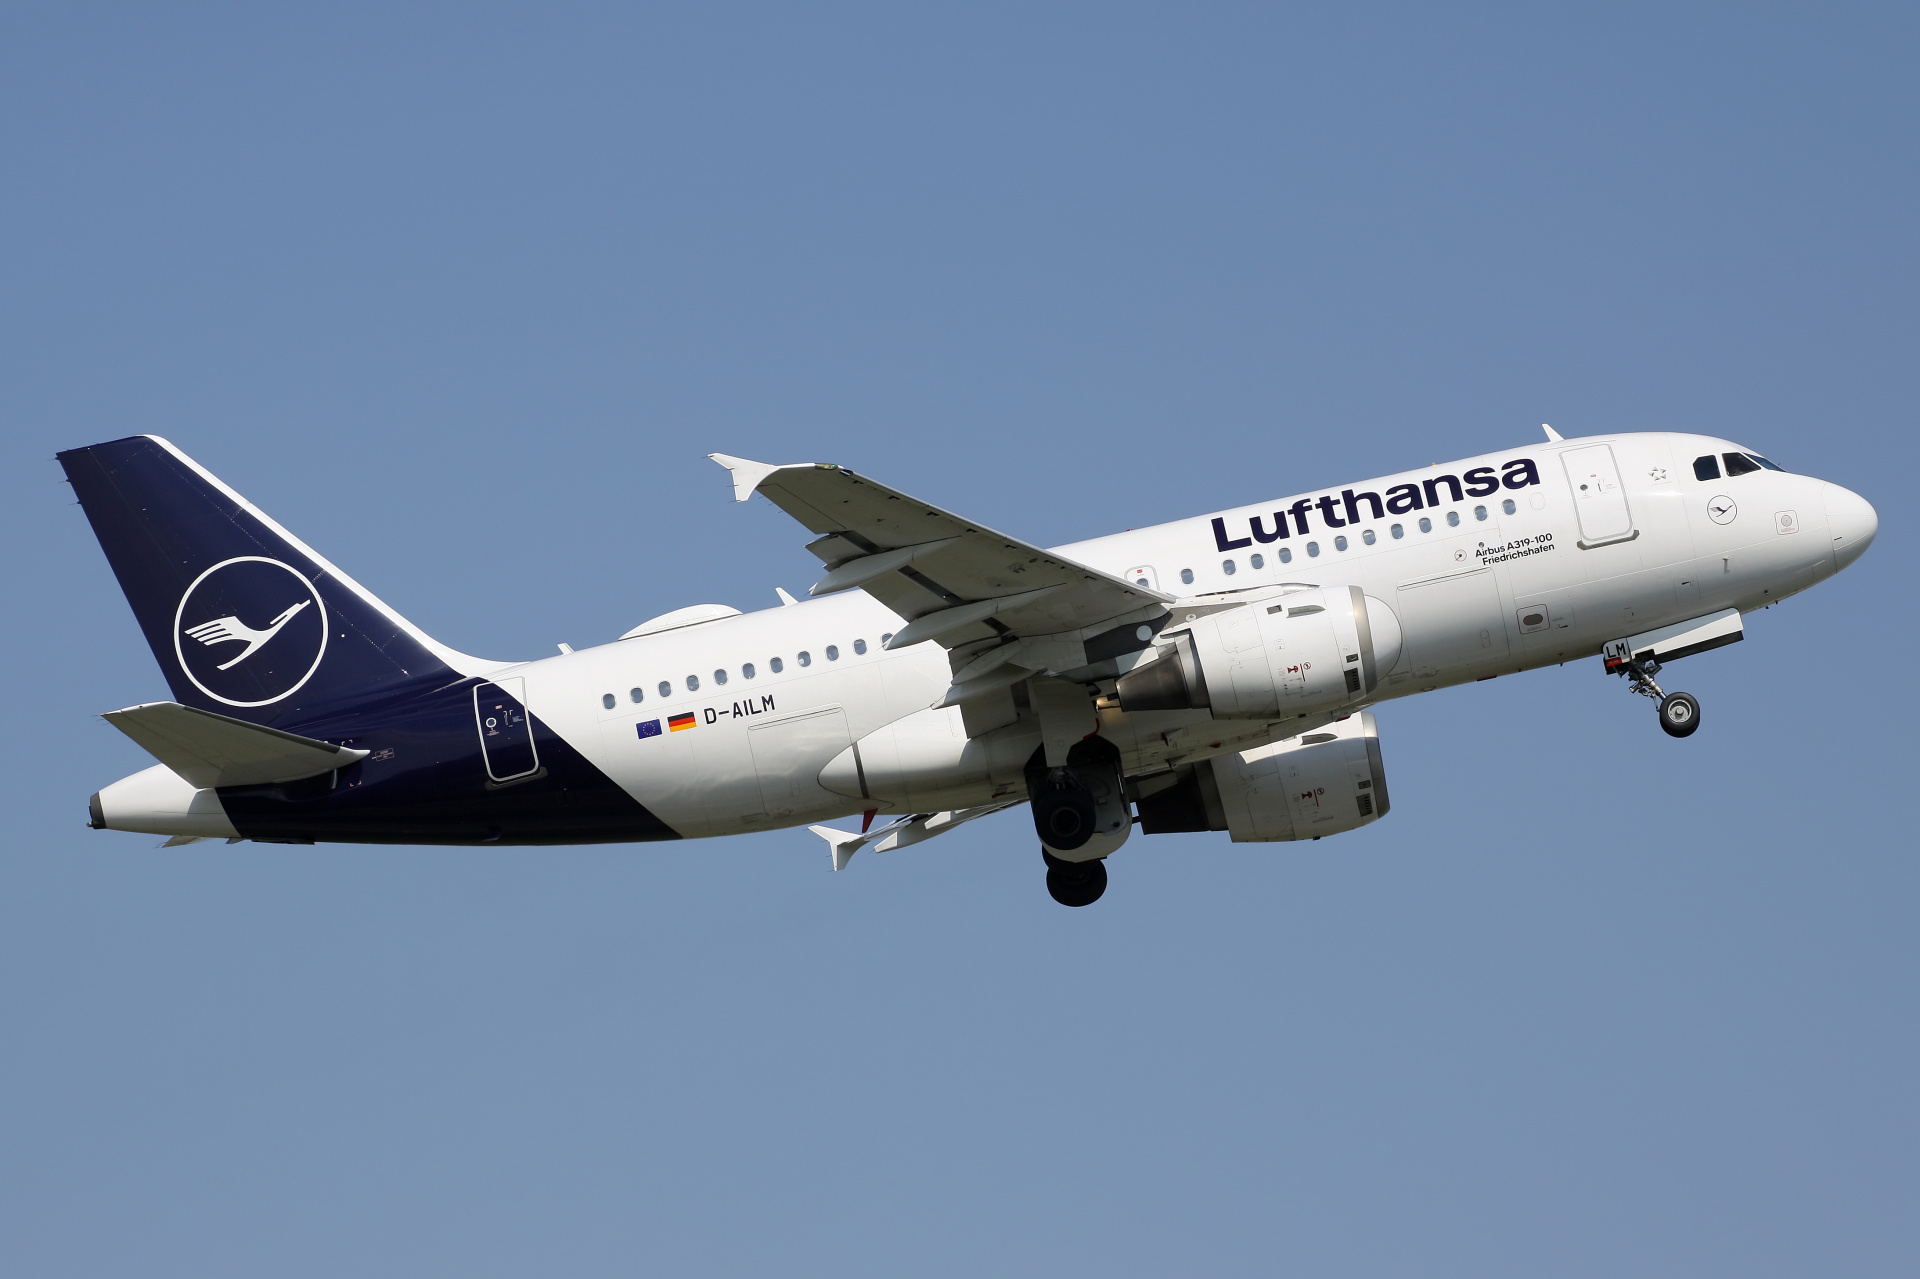 D-AILM (new livery) (Aircraft » EPWA Spotting » Airbus A319-100 » Lufthansa)